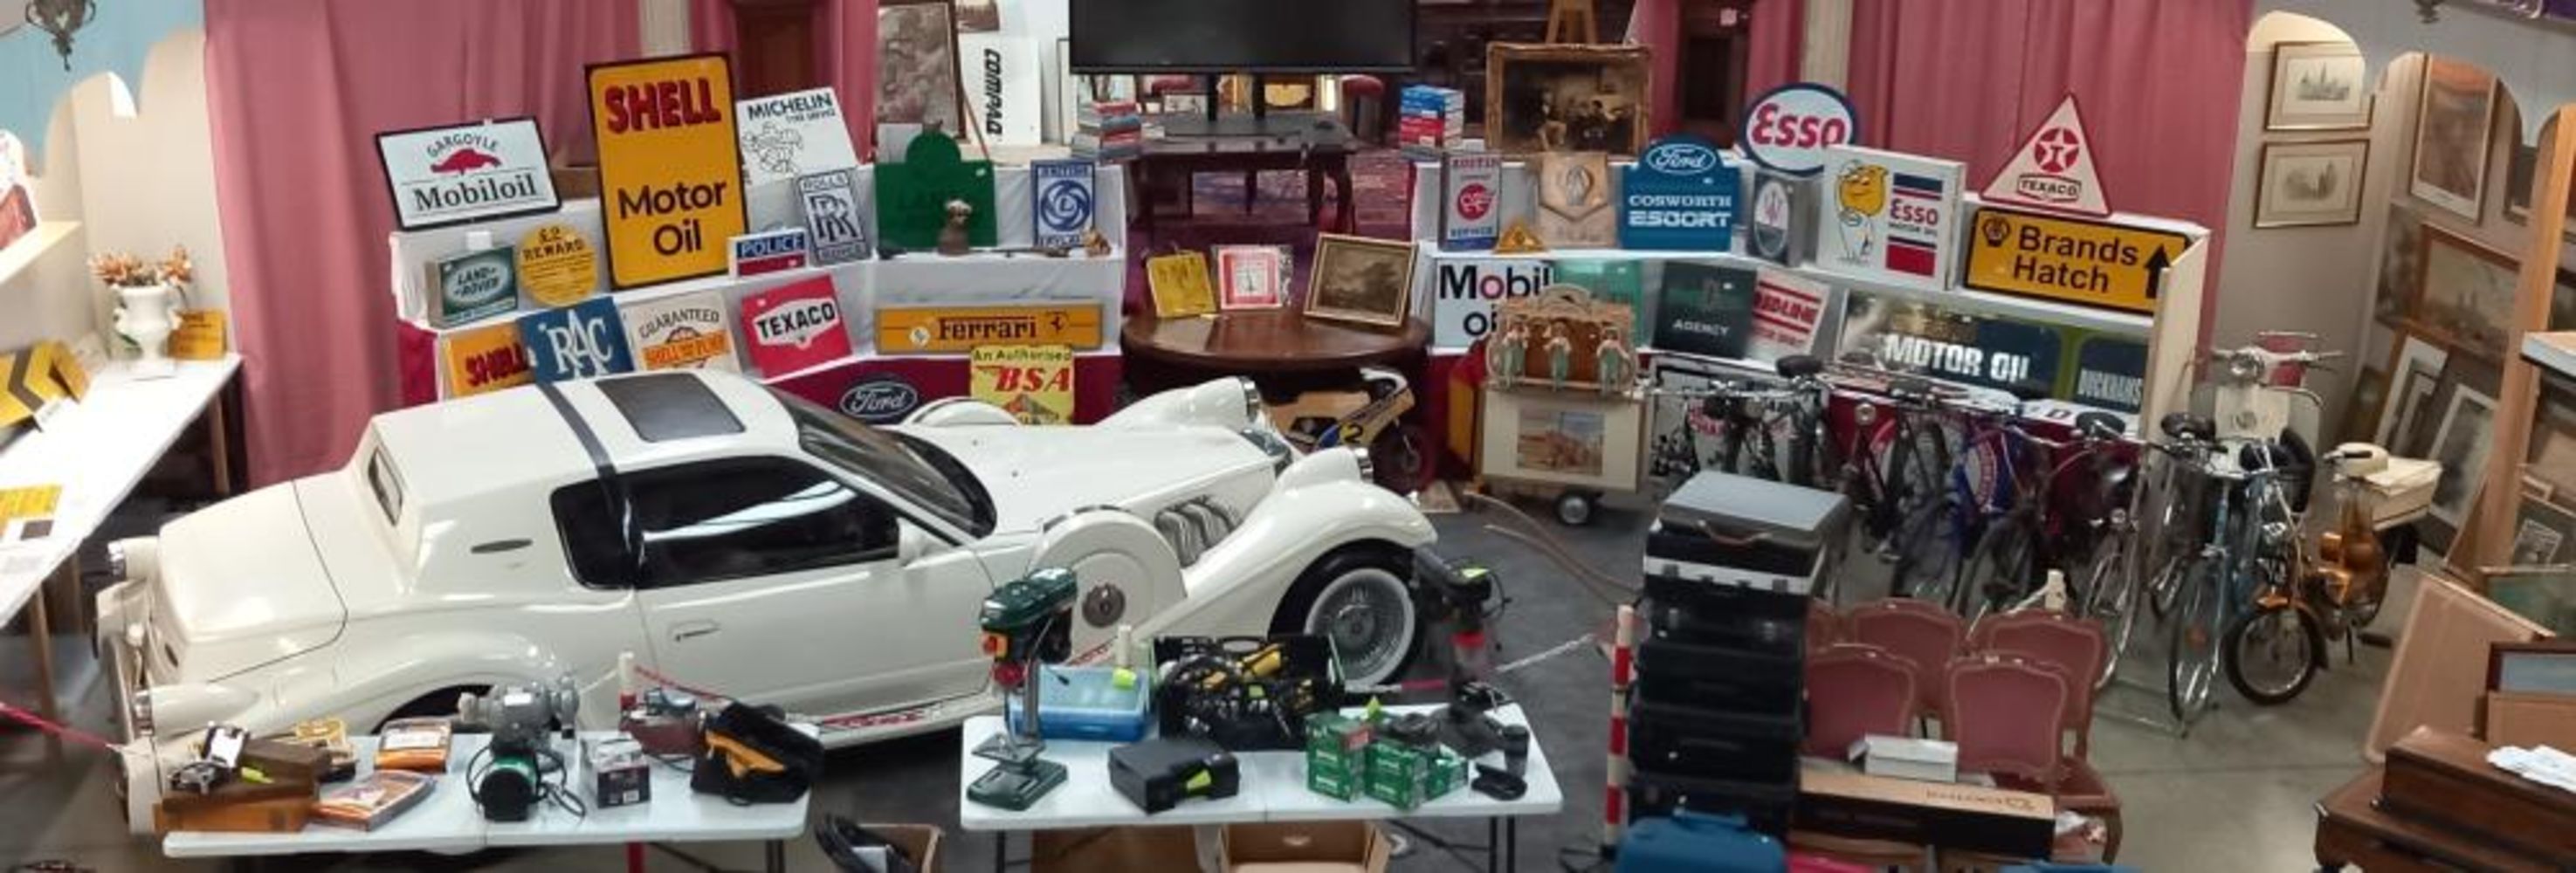 Classic auction of memorabilia, including a 1991 Mitsuoka Le Seyde car, motorbikes, car spares & general items